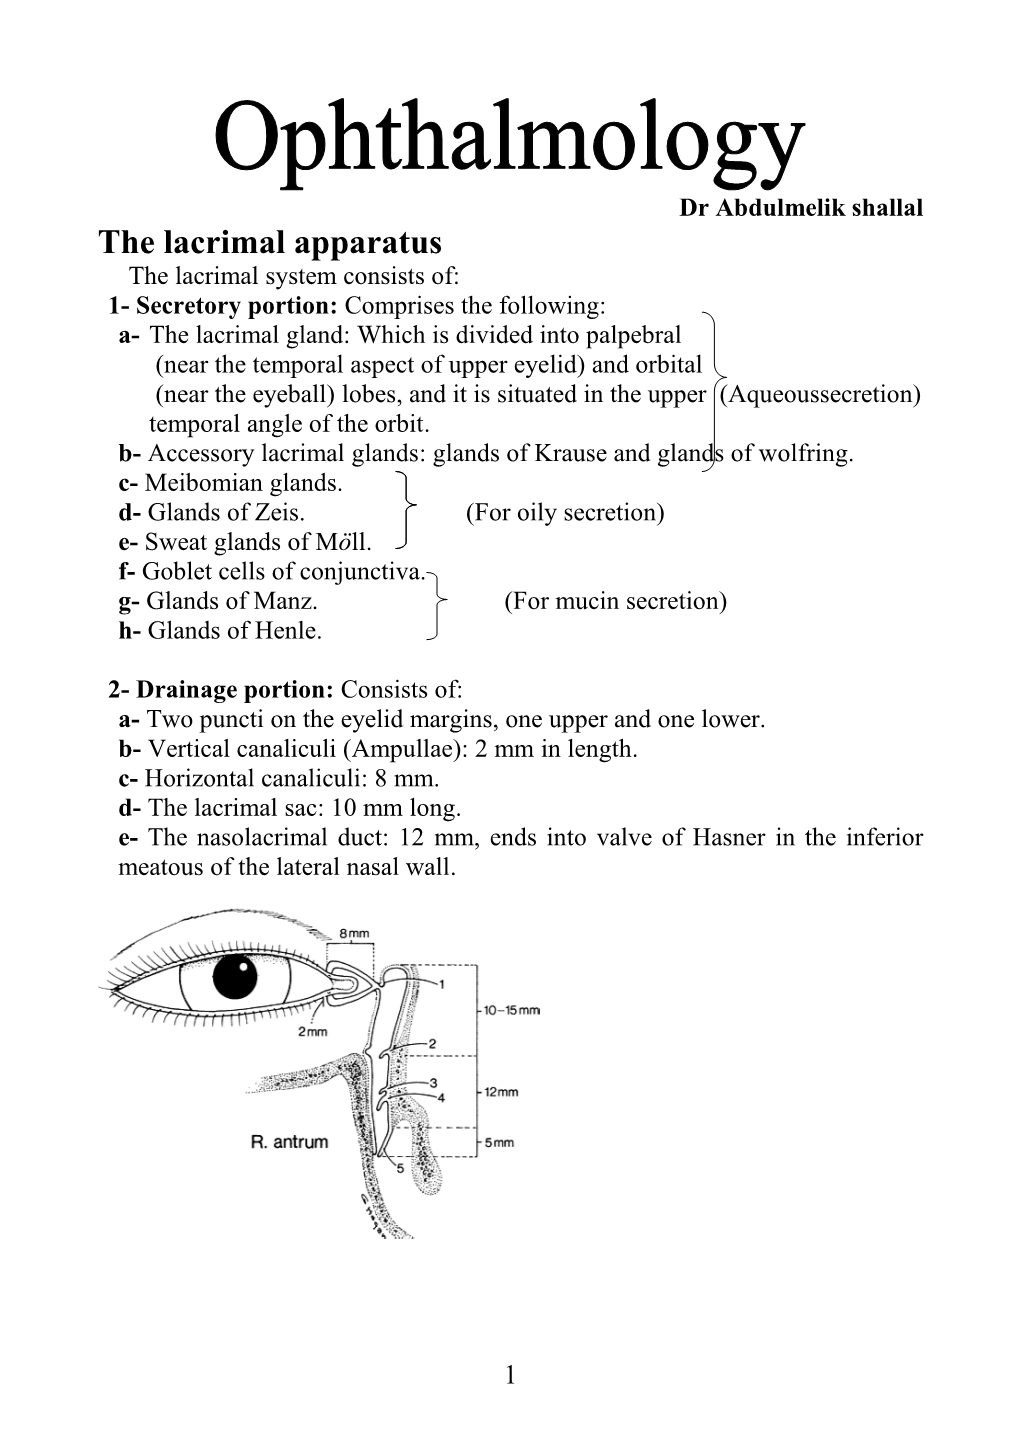 The Lacrimal Apparatus